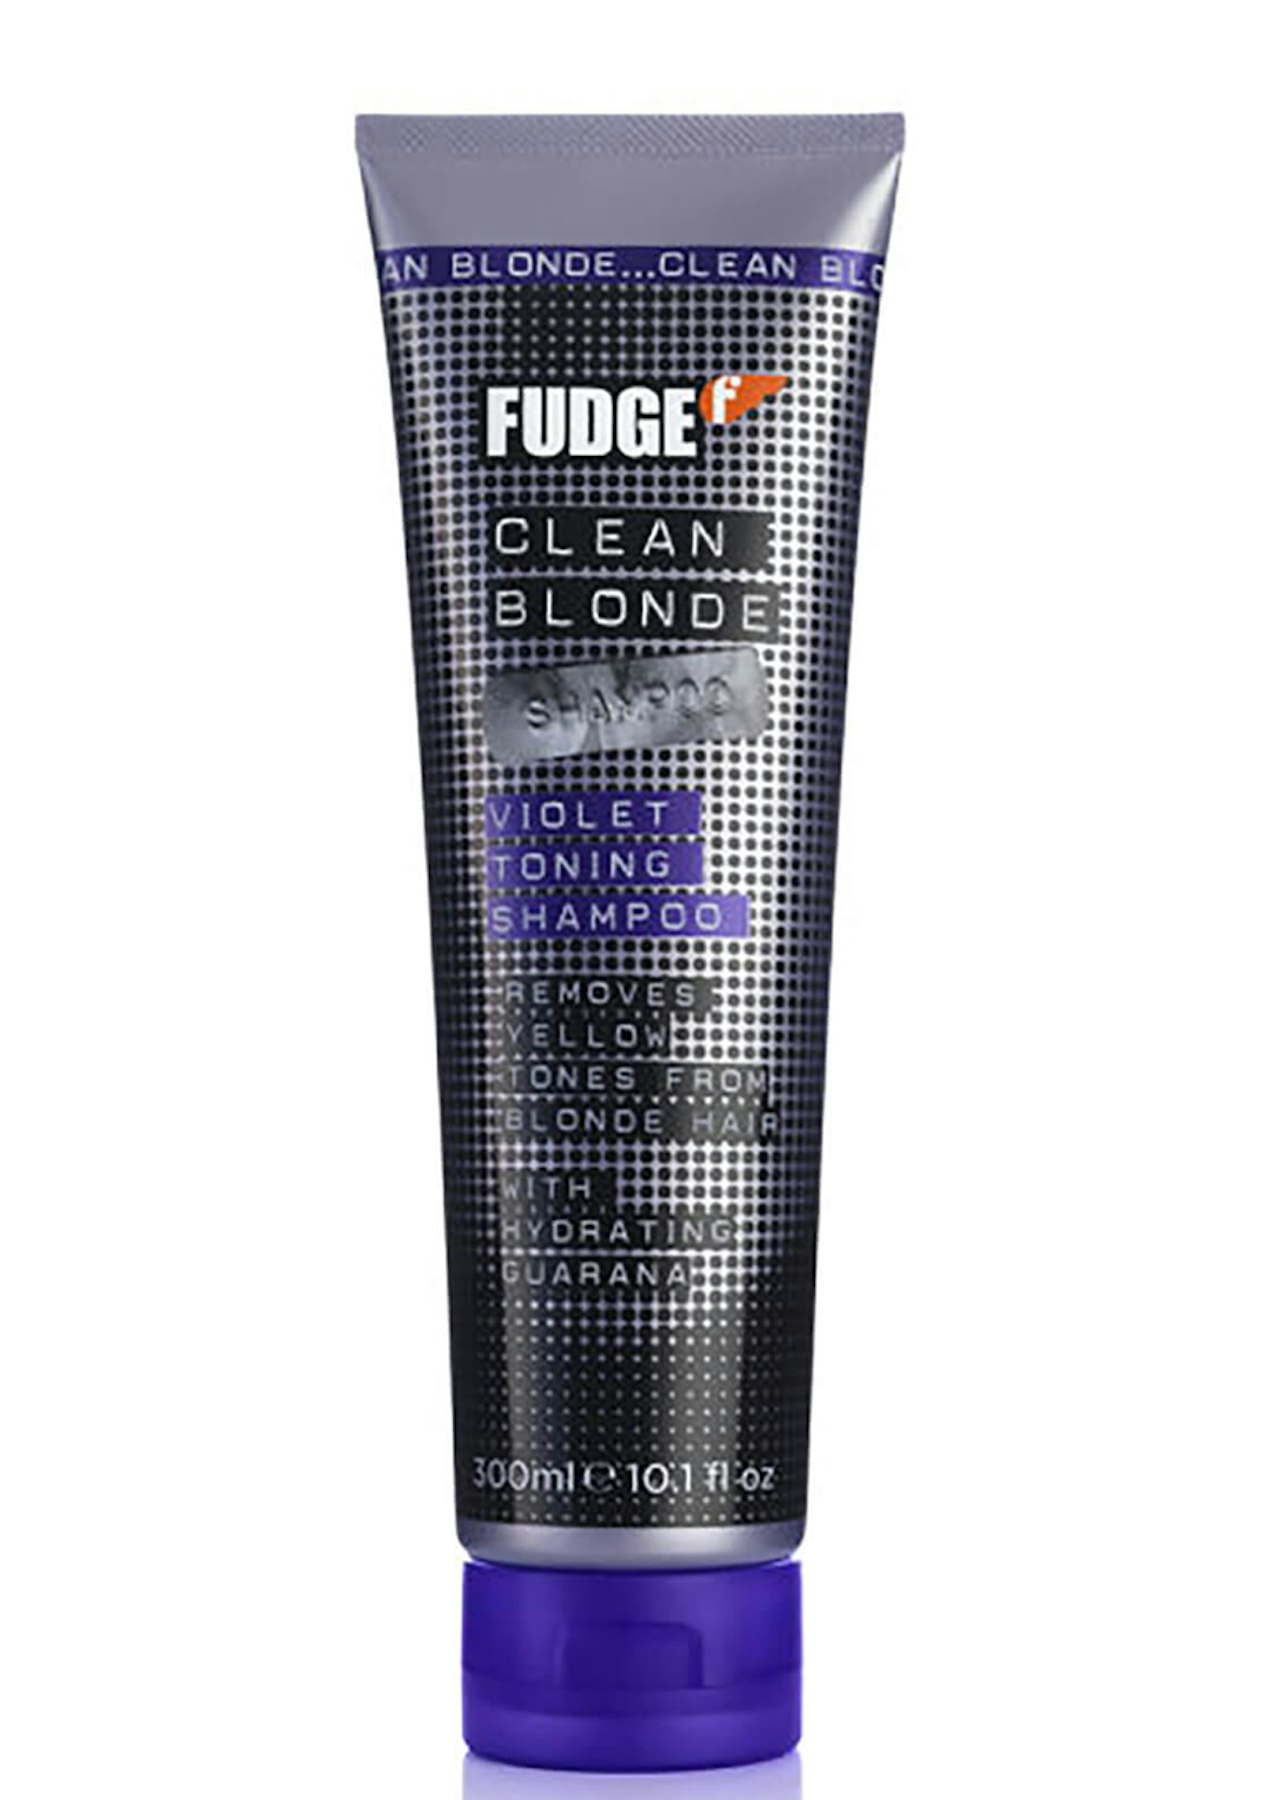 Fudge Blonde Violet Shampoo 300ml Free Shipping Beauty Skin